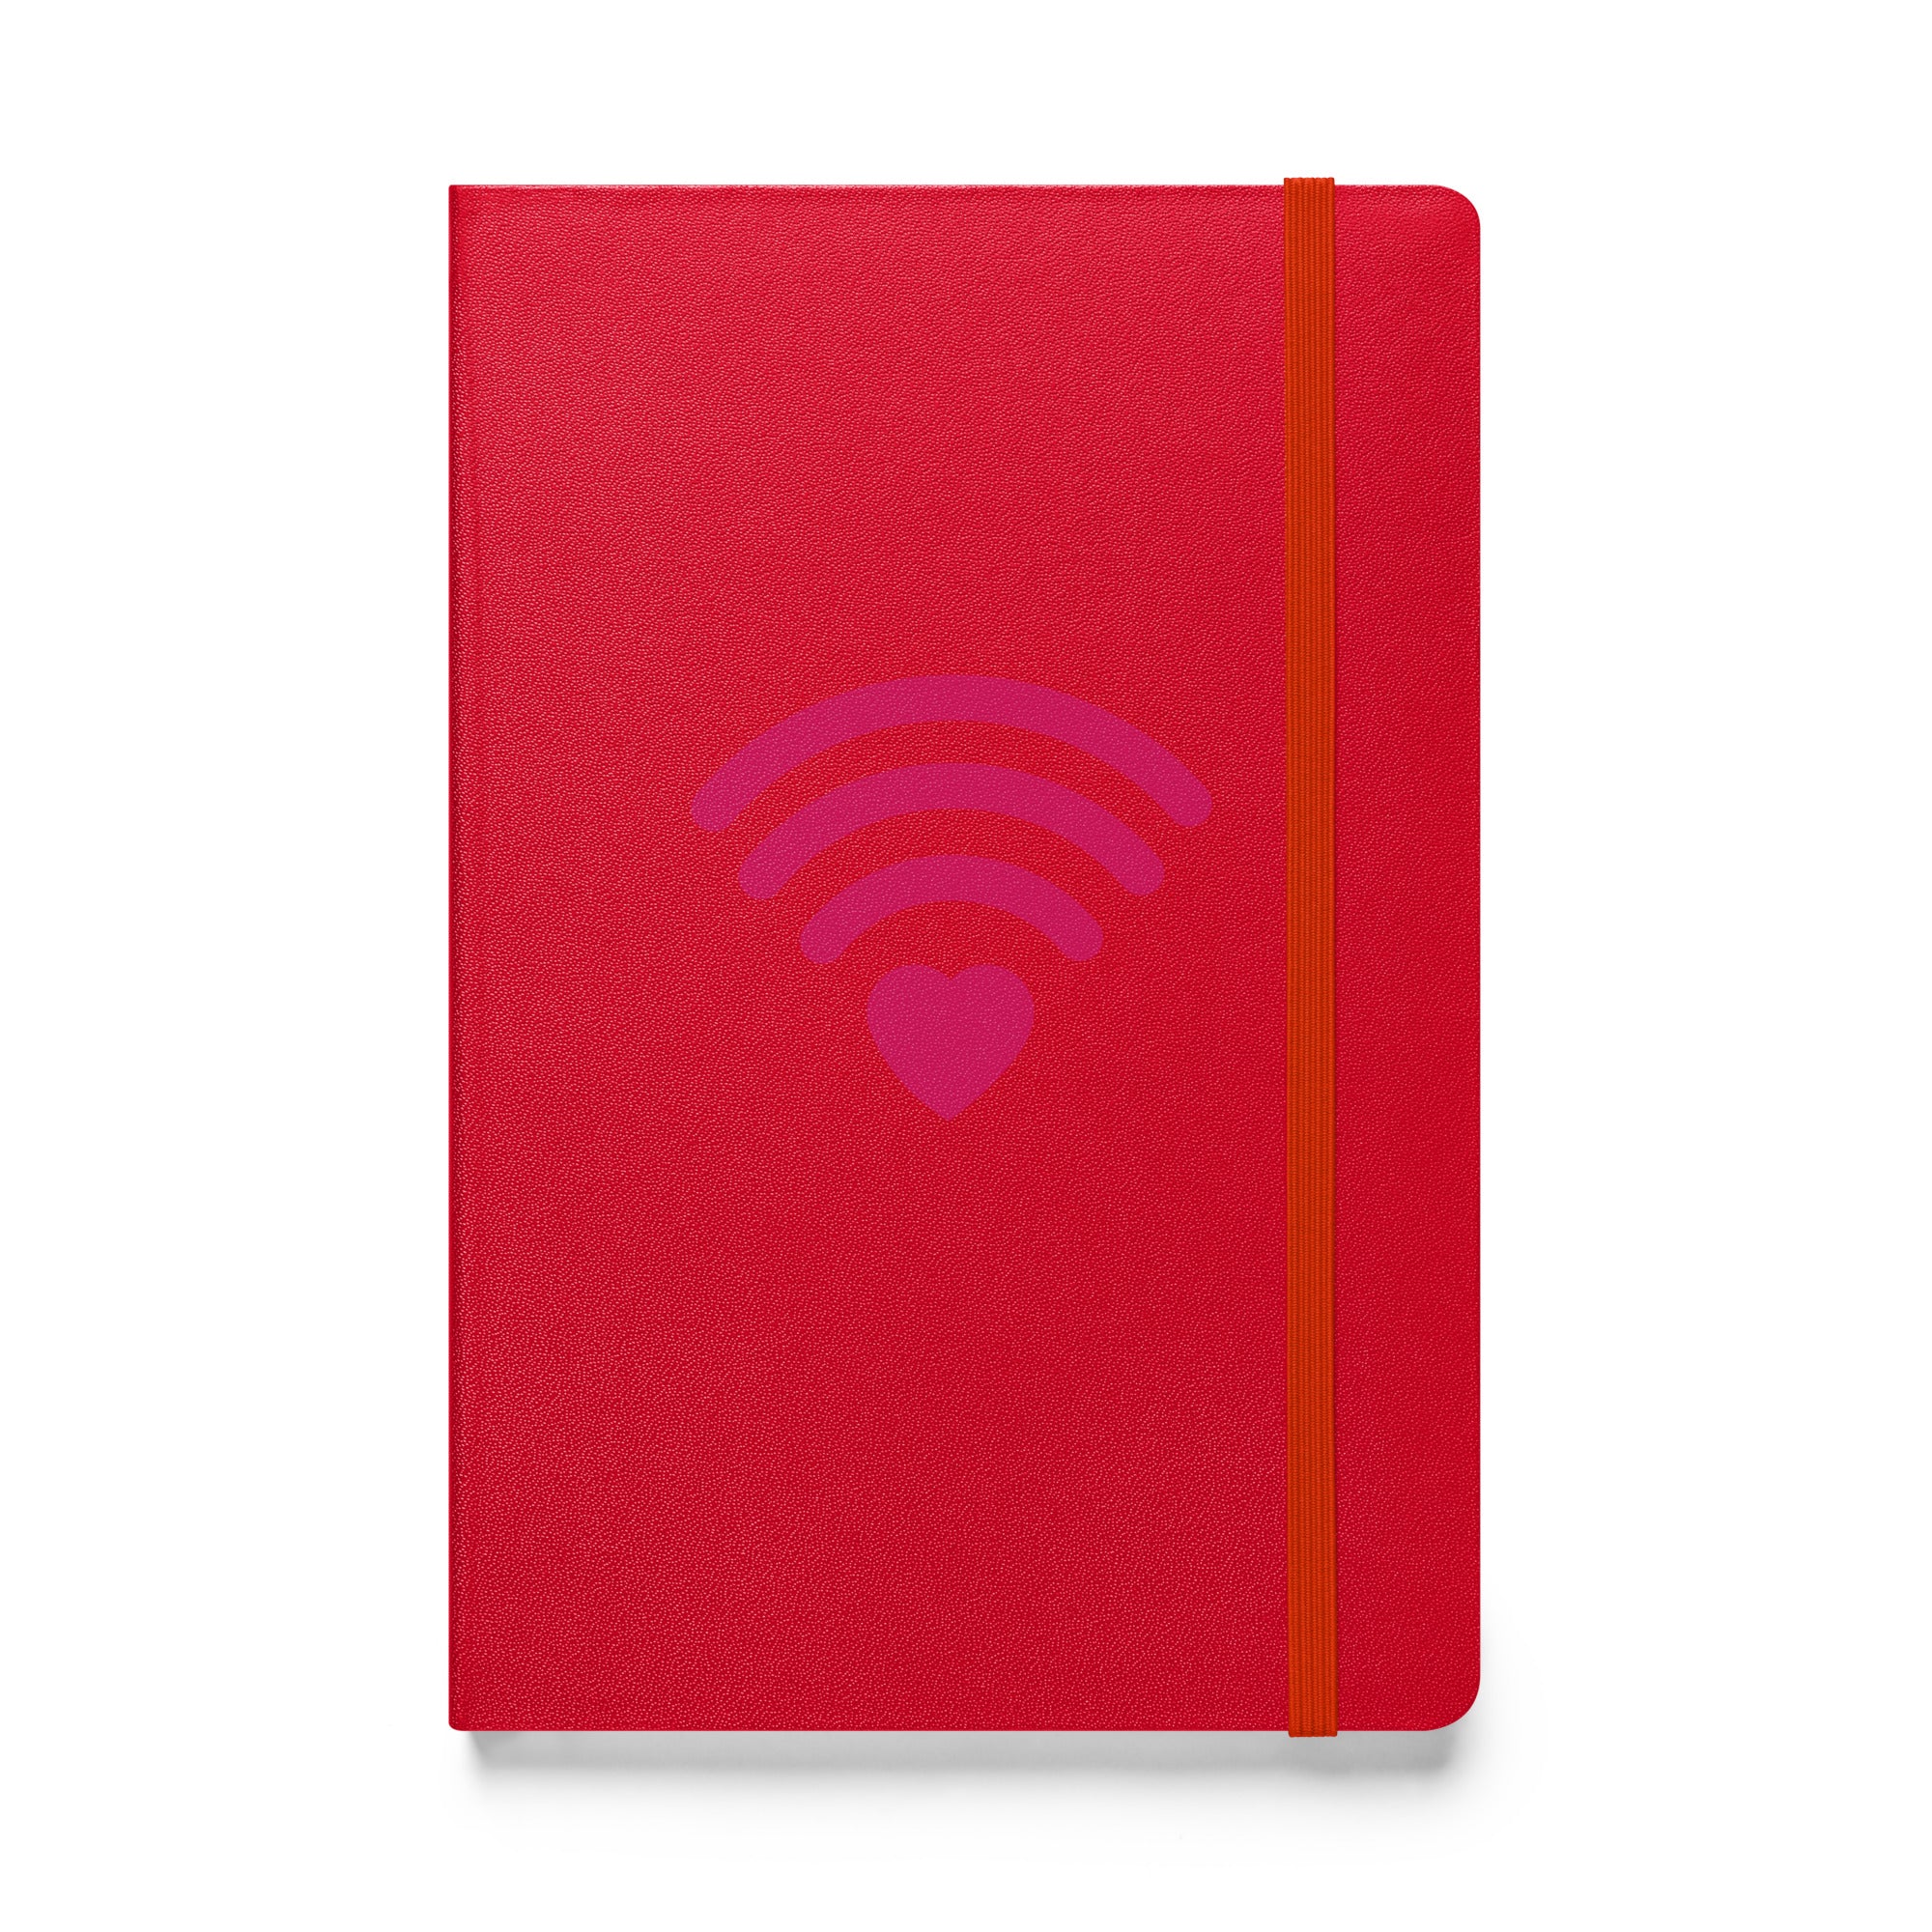 Heart Signal Hardcover bound notebook